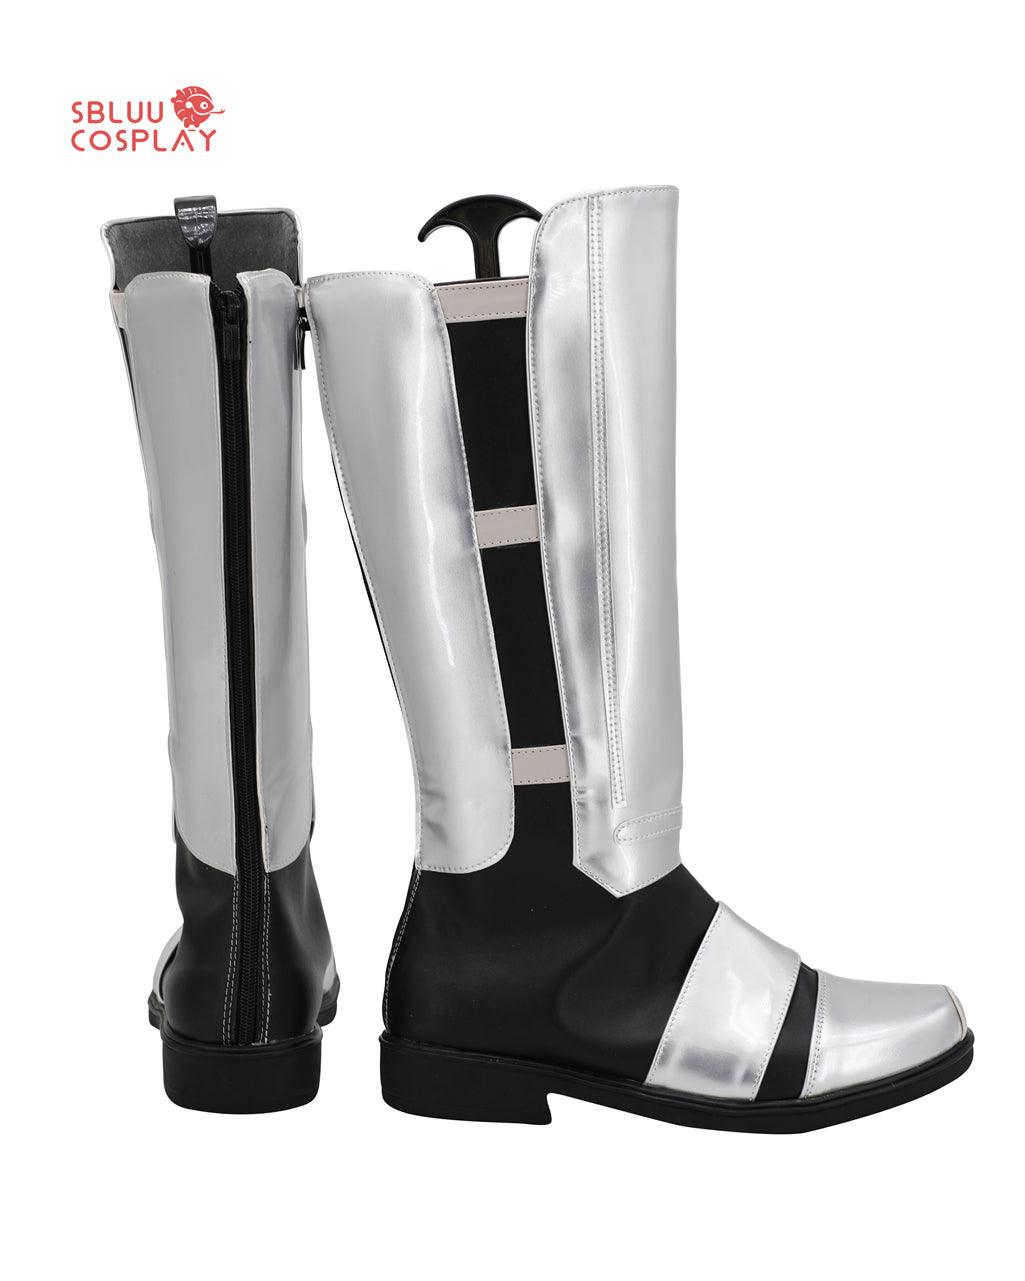 Star Wars Darth Revan Cosplay Shoes Custom Made Boots - SBluuCosplay